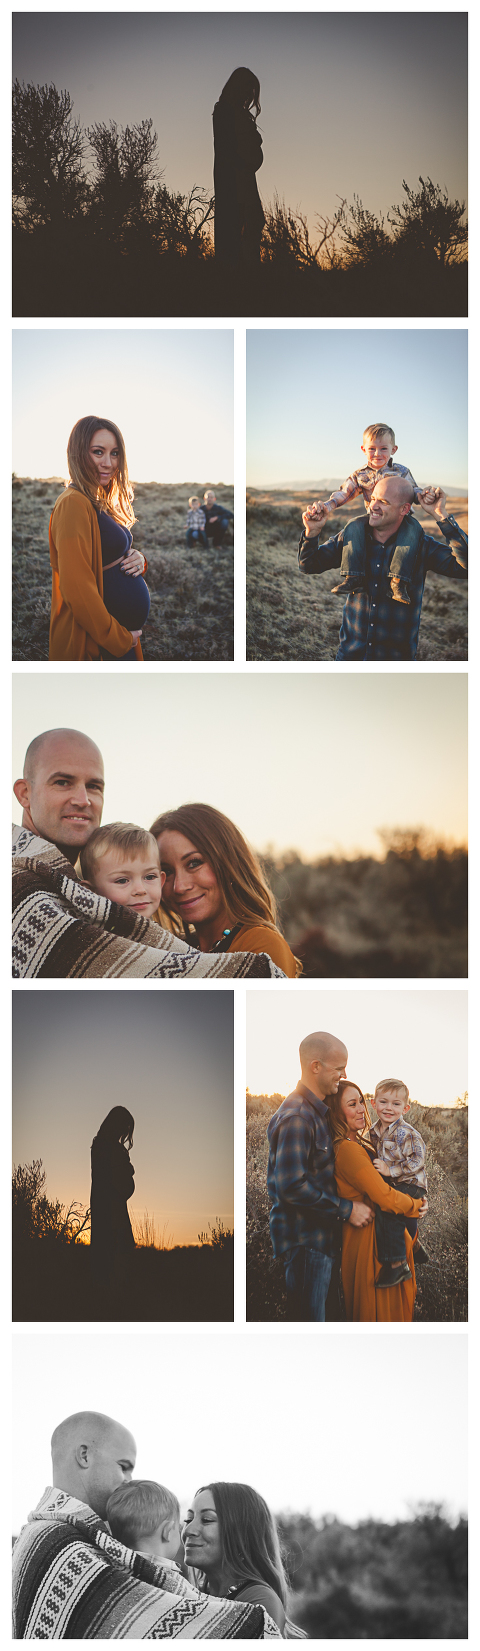 Sunset in the Desert with Jones family, Naches Maternity Photographer